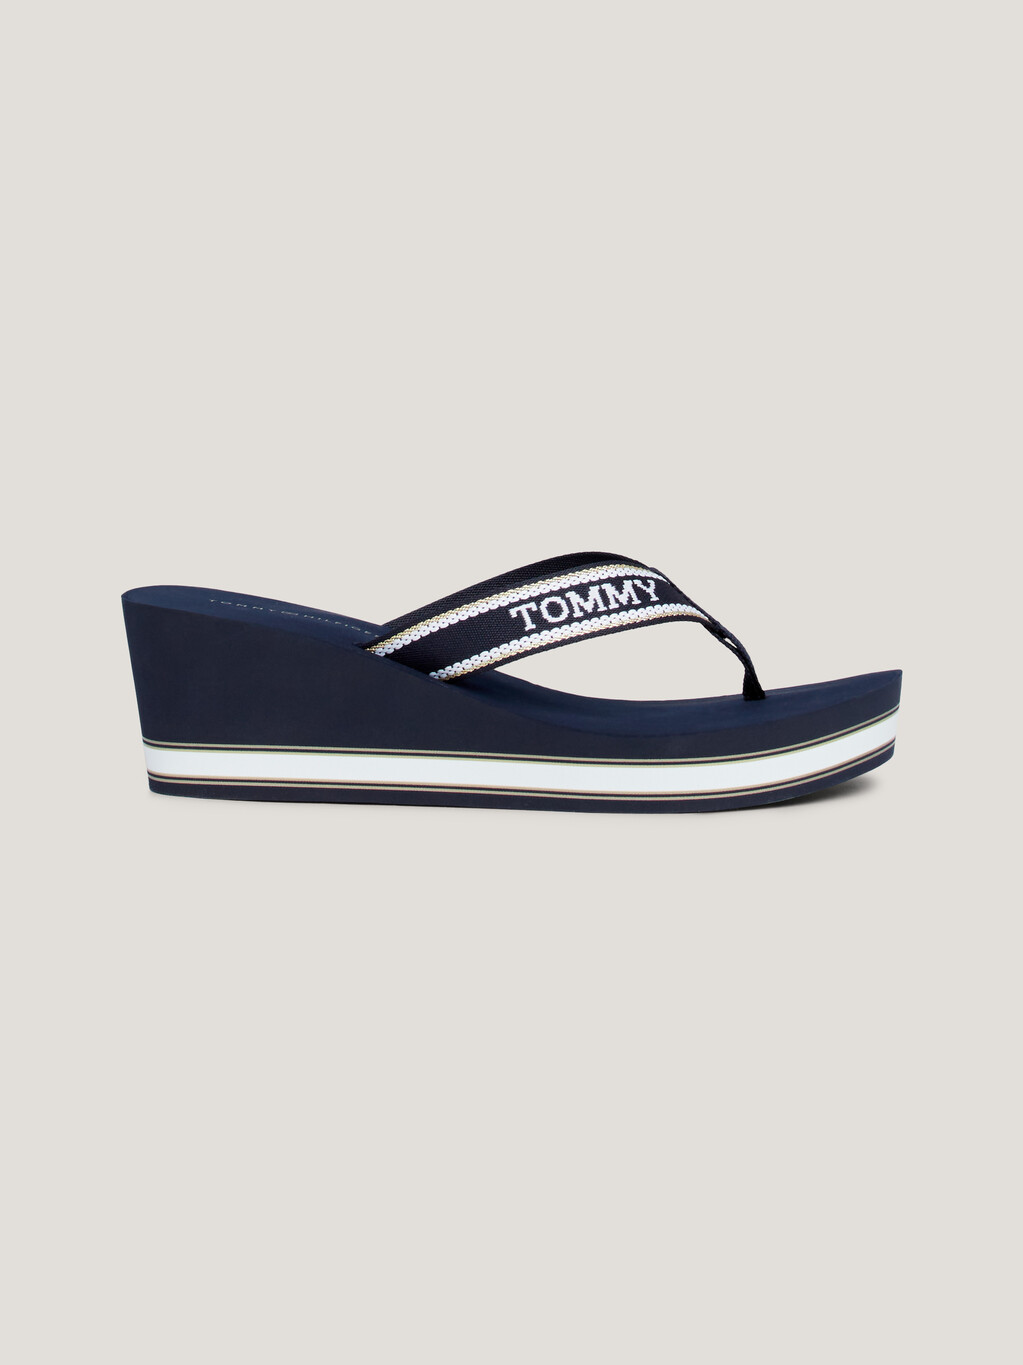 Logo Strap Wedge Heel Beach Sandals, Space Blue, hi-res